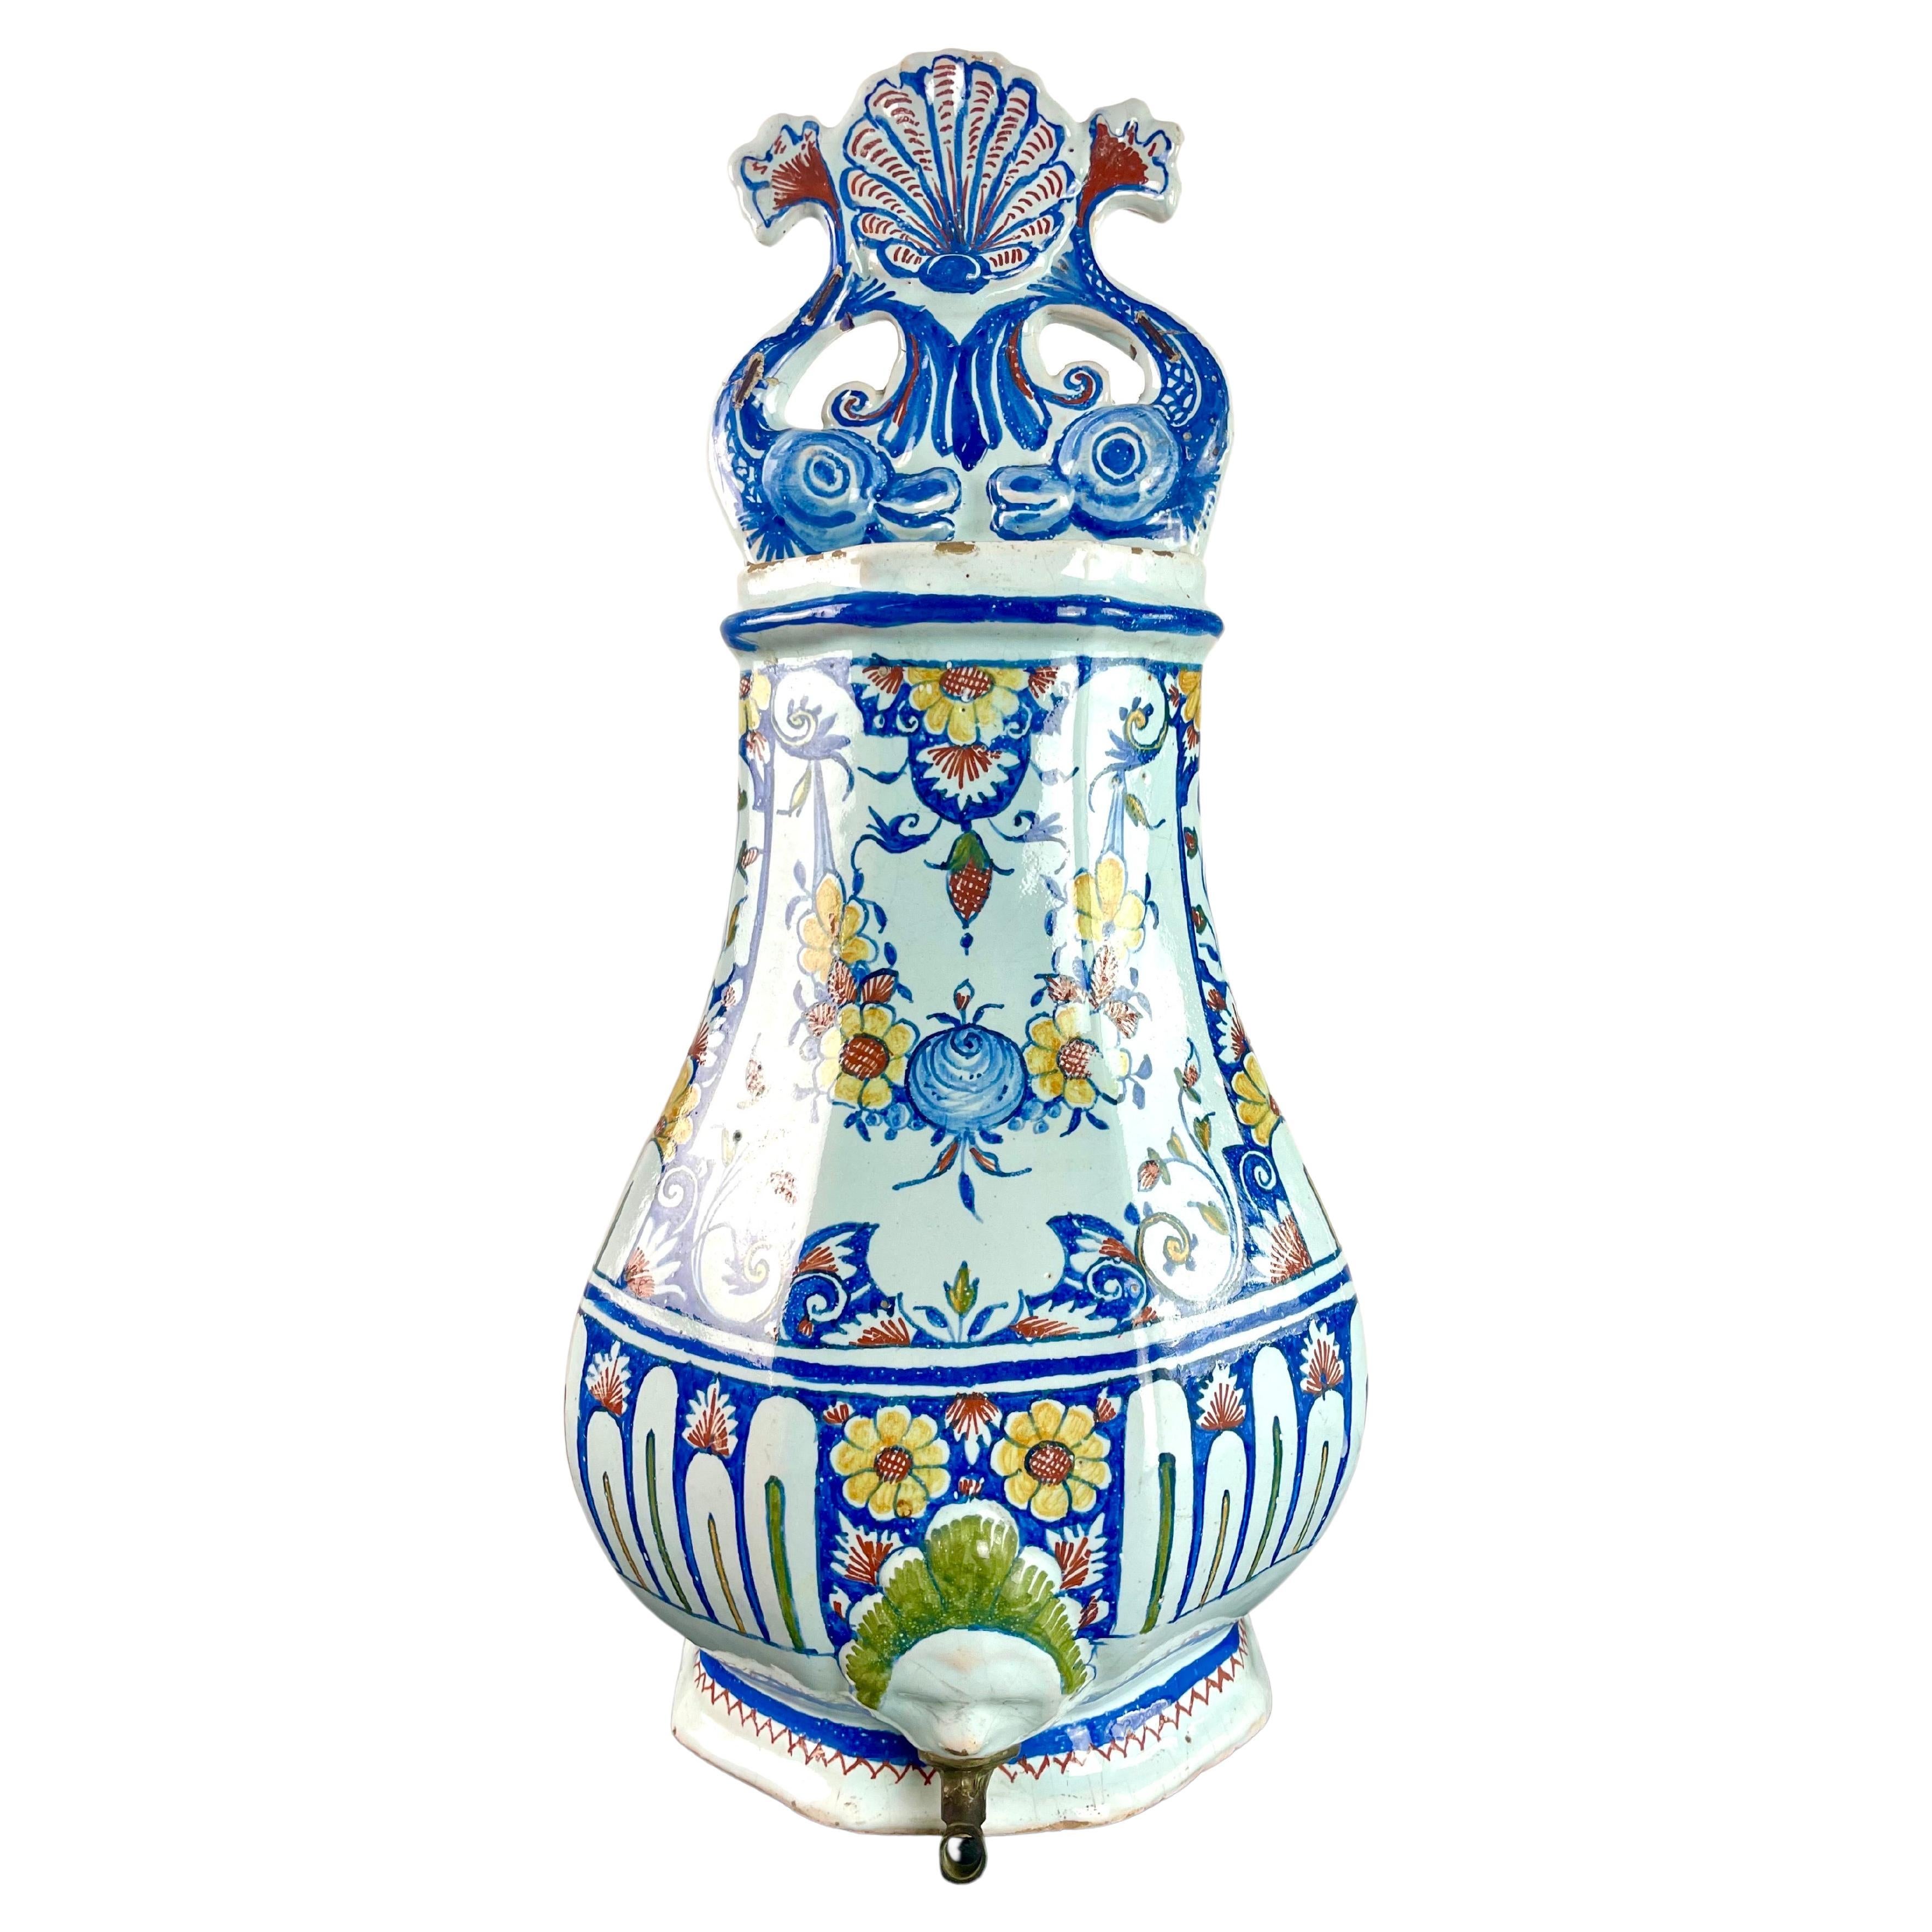 Vase - Rouen earthenware fountain, flower pot - blue white - 18th century France